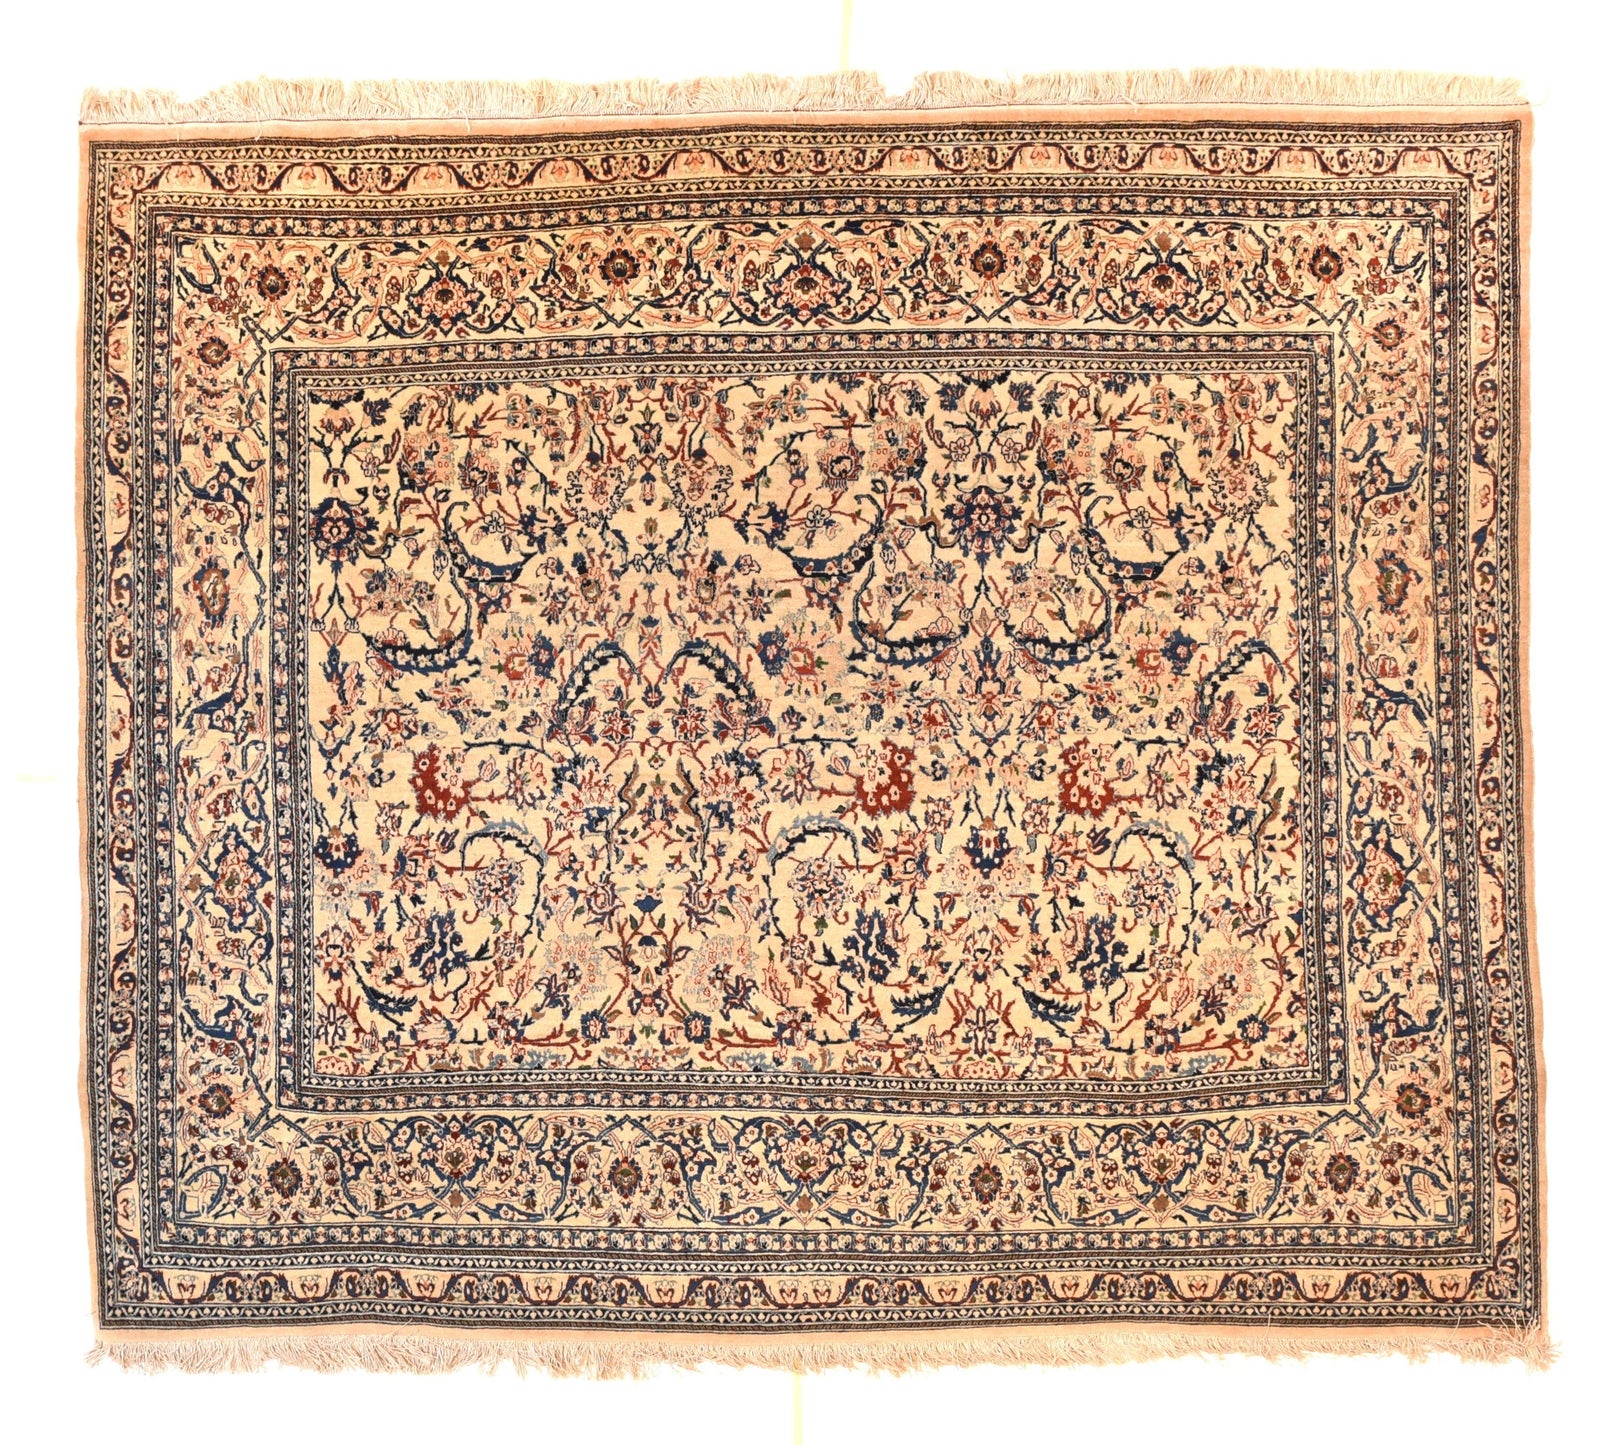 Antique Gold Brown Persian Nain Area Rug